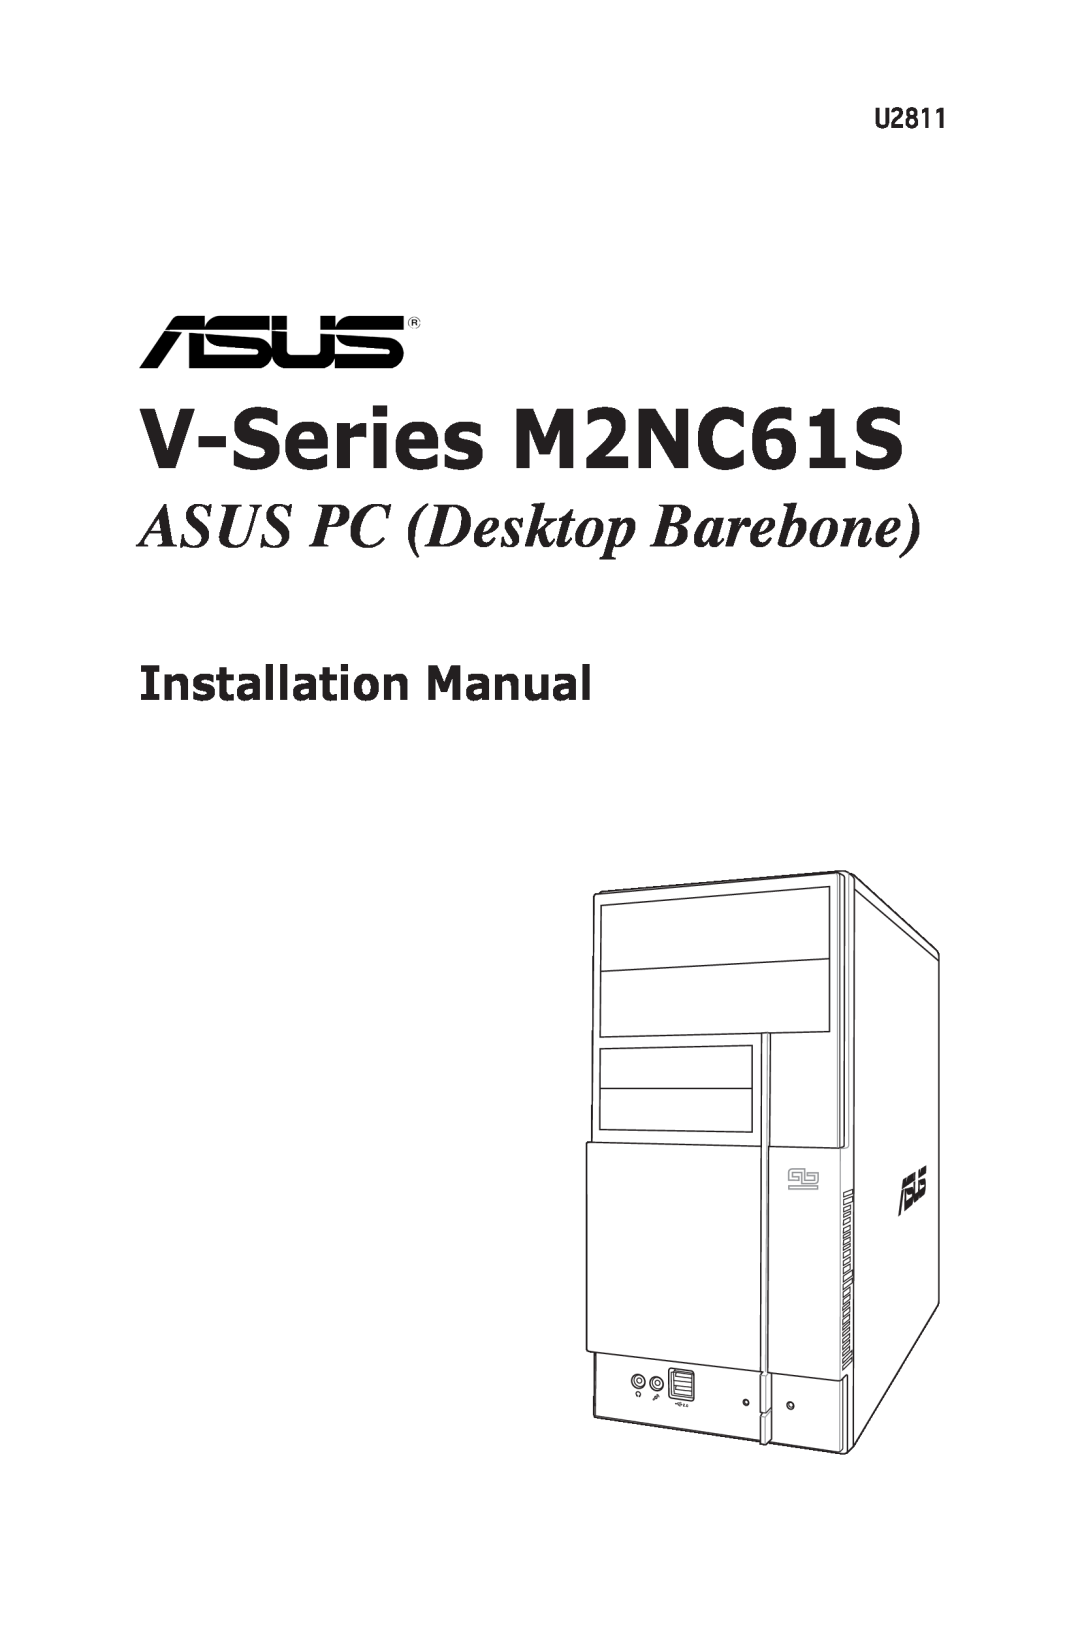 Asus installation manual V-Series M2NC61S, ASUS PC Desktop Barebone, Installation Manual 